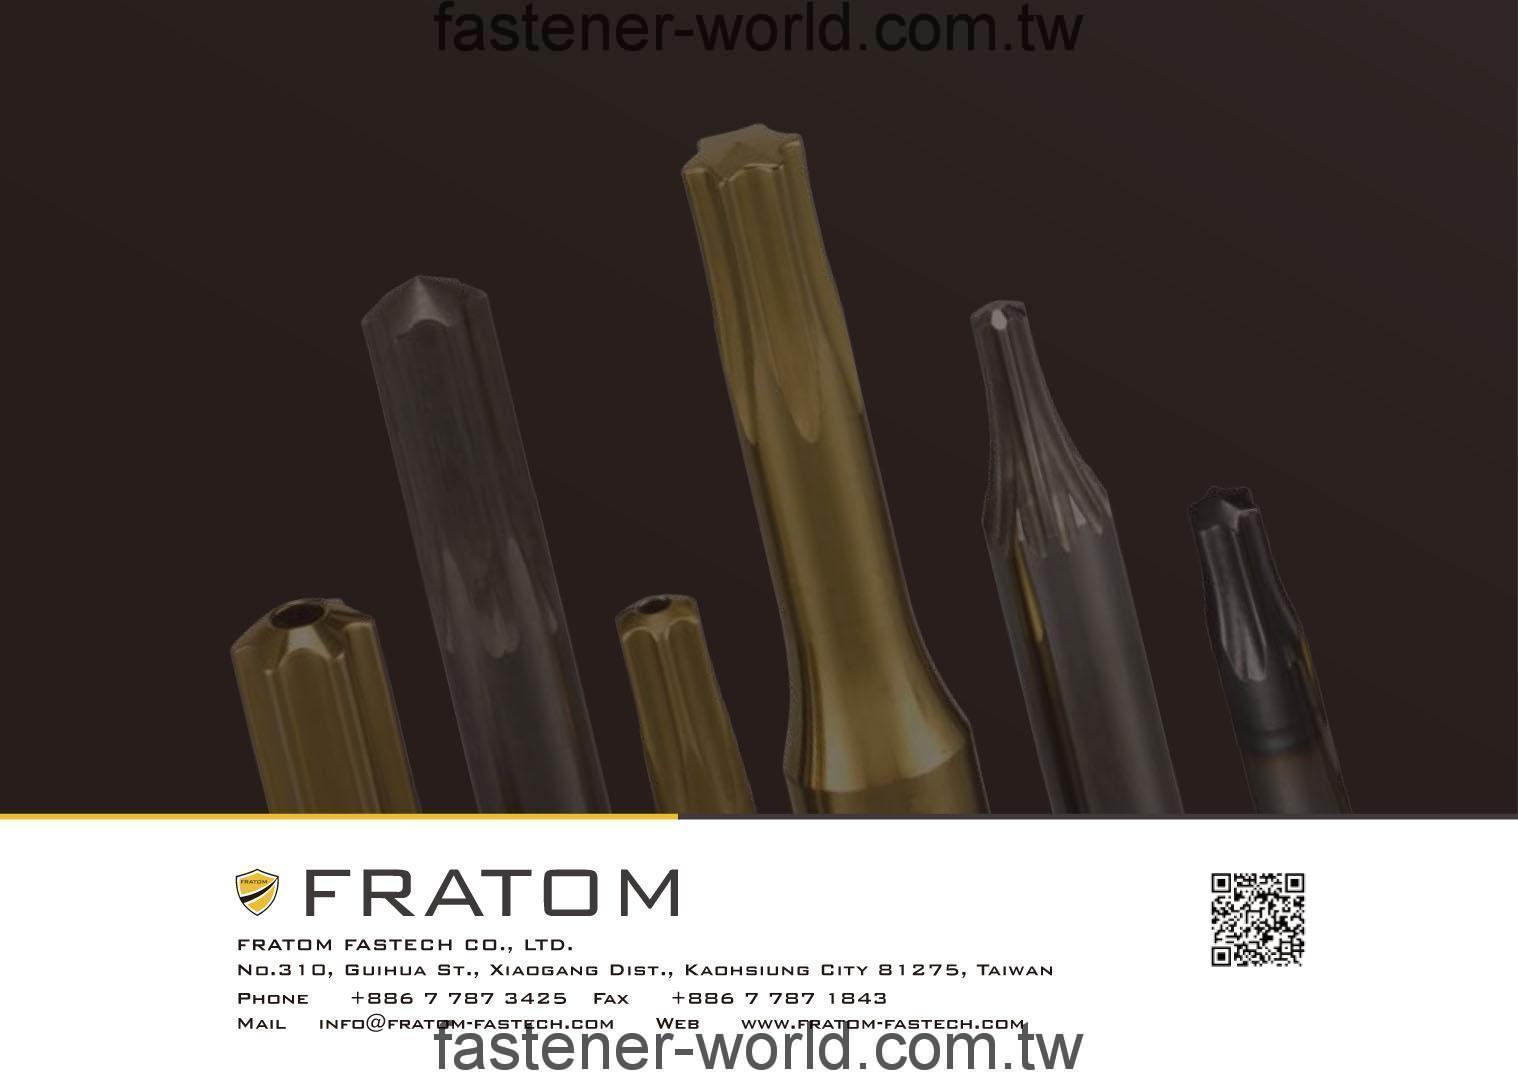 FRATOM FASTECH CO., LTD. Online Catalogues